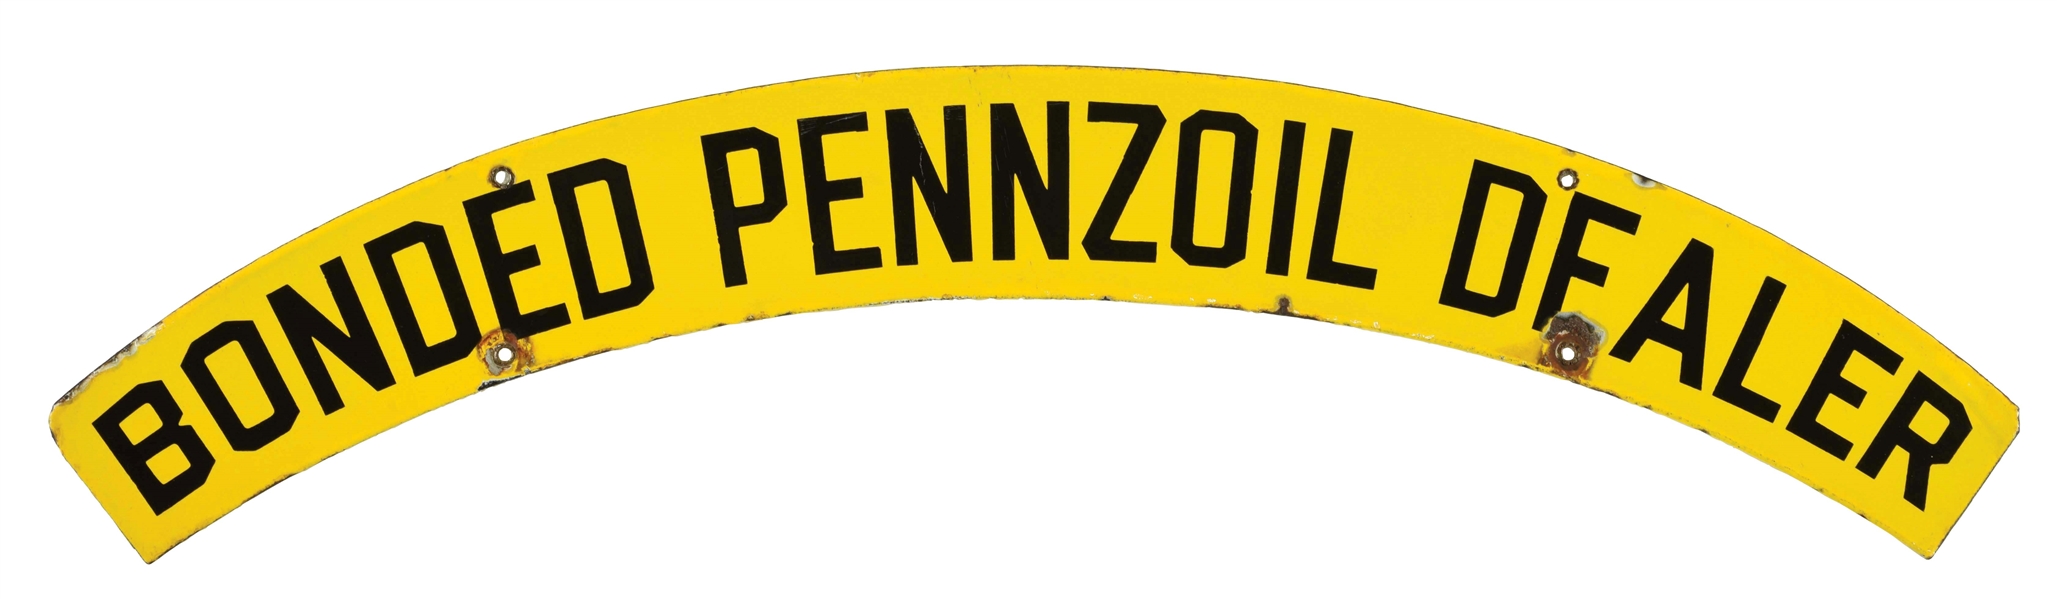 PENNZOIL MOTOR OIL BONDED DEALER PORCELAIN CURB SIGN TOPPER.